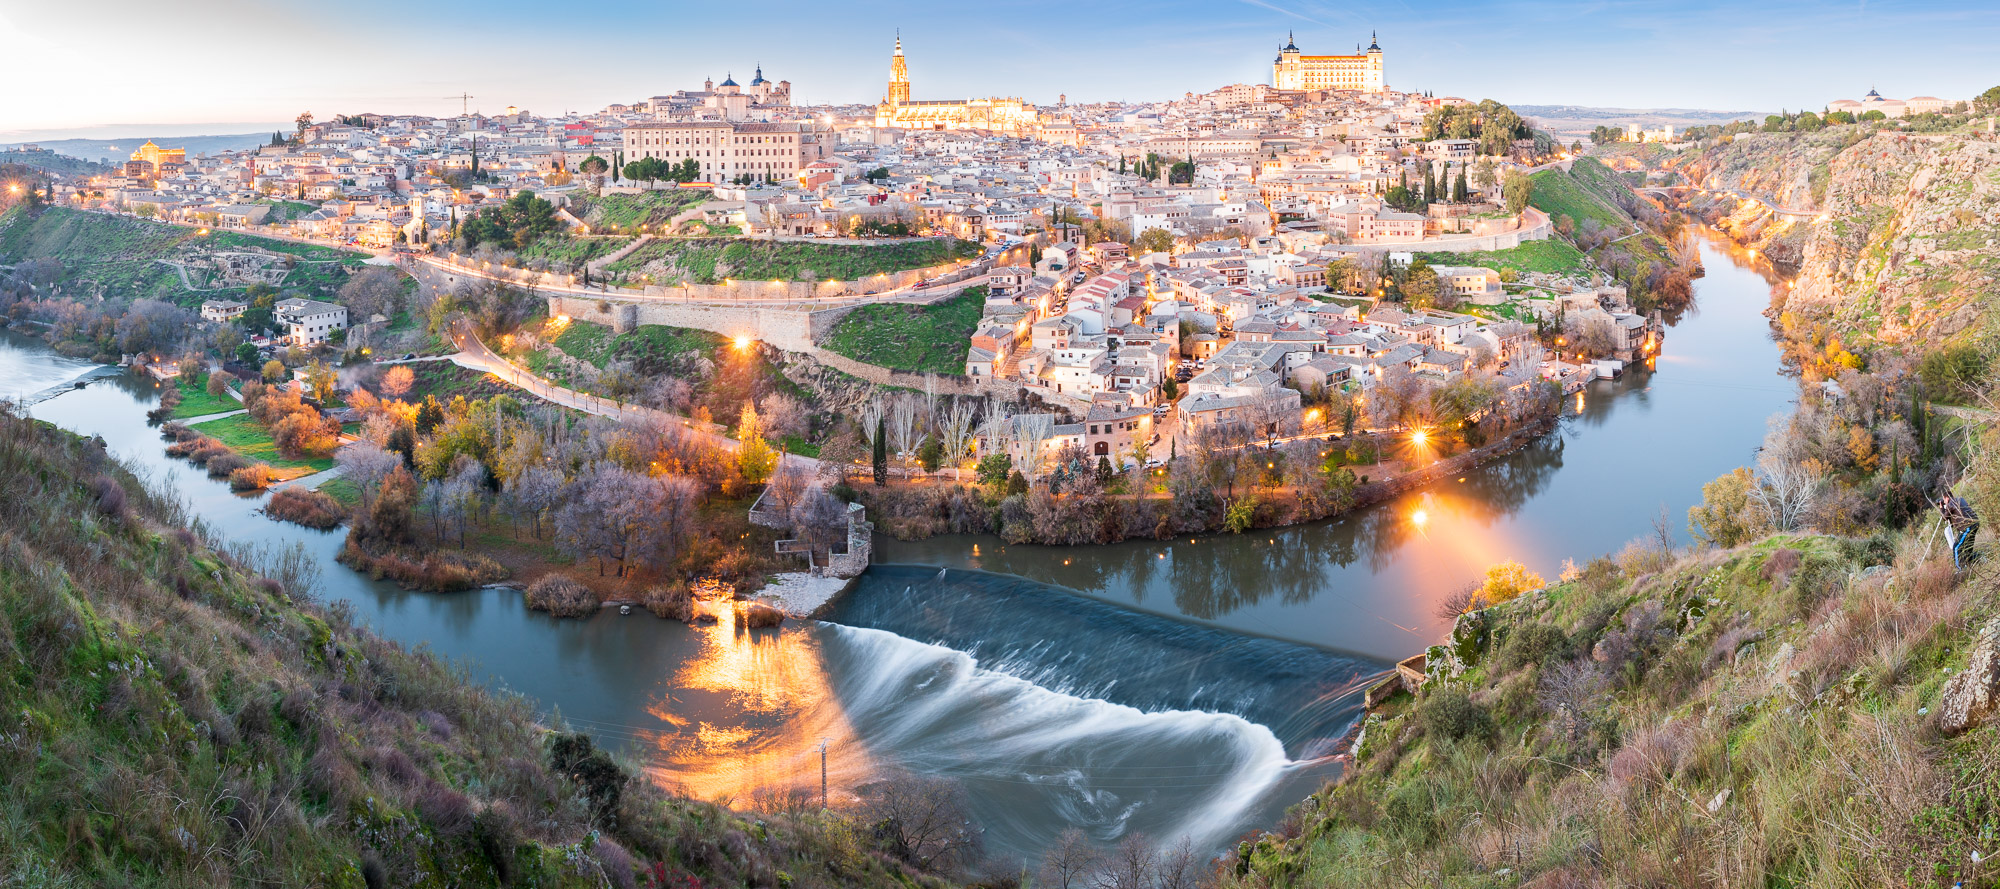 Toledo Sunset - Toledo, Spain - Spain, Toledo, landscape, long exposure, panorama, river